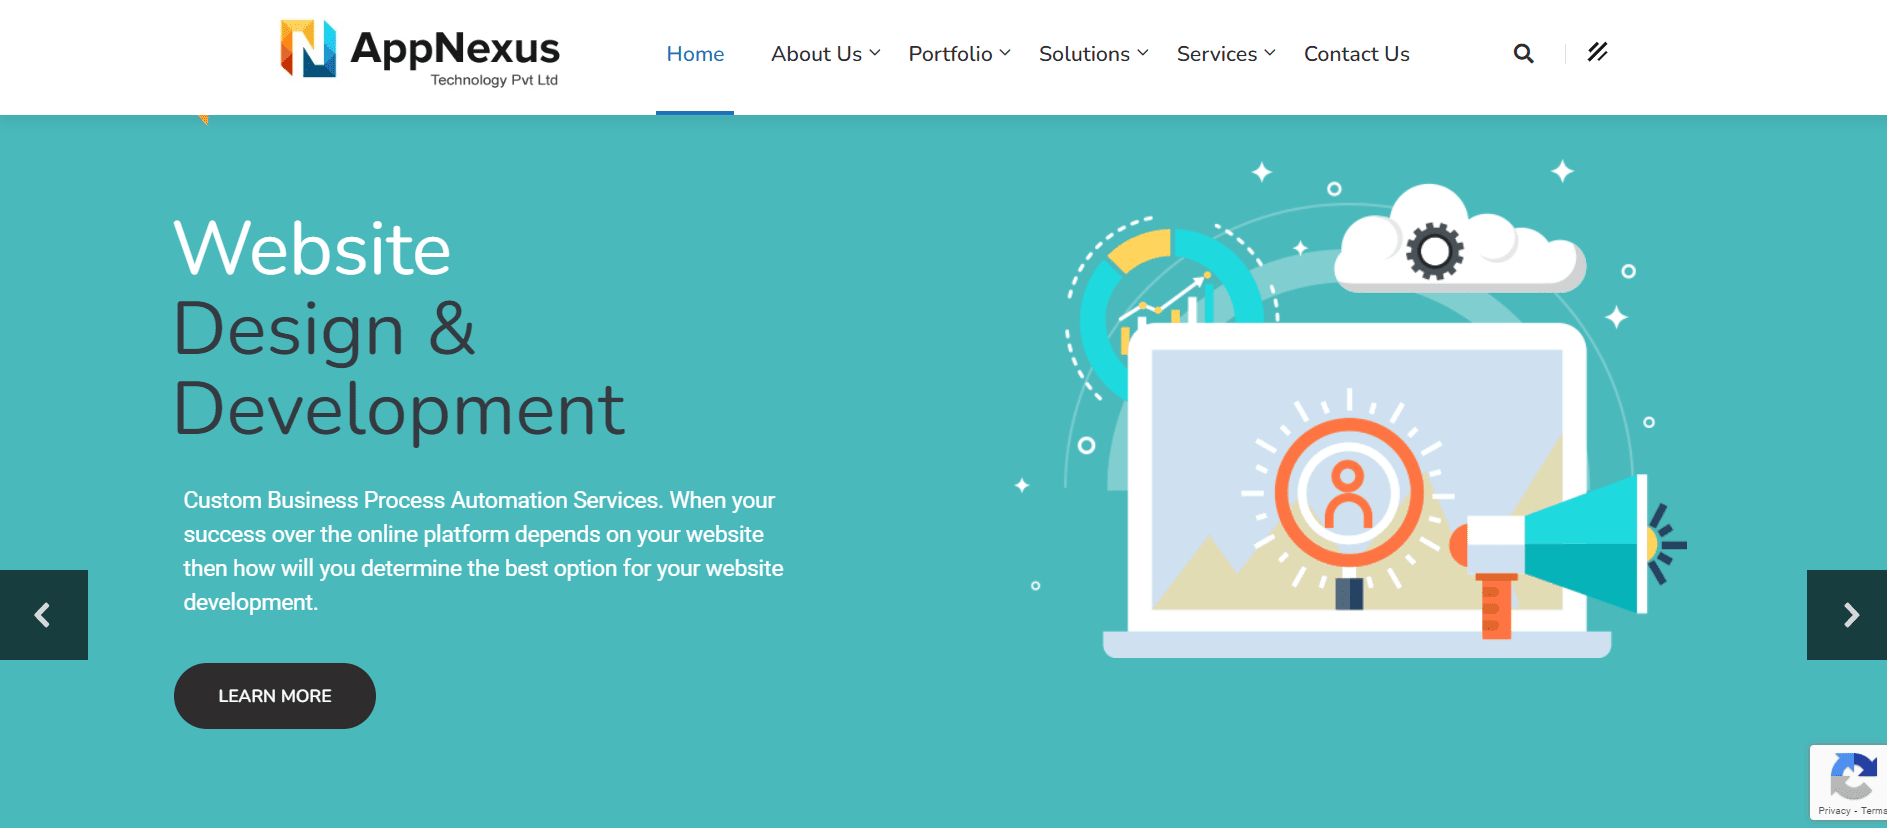 appnexus homepage